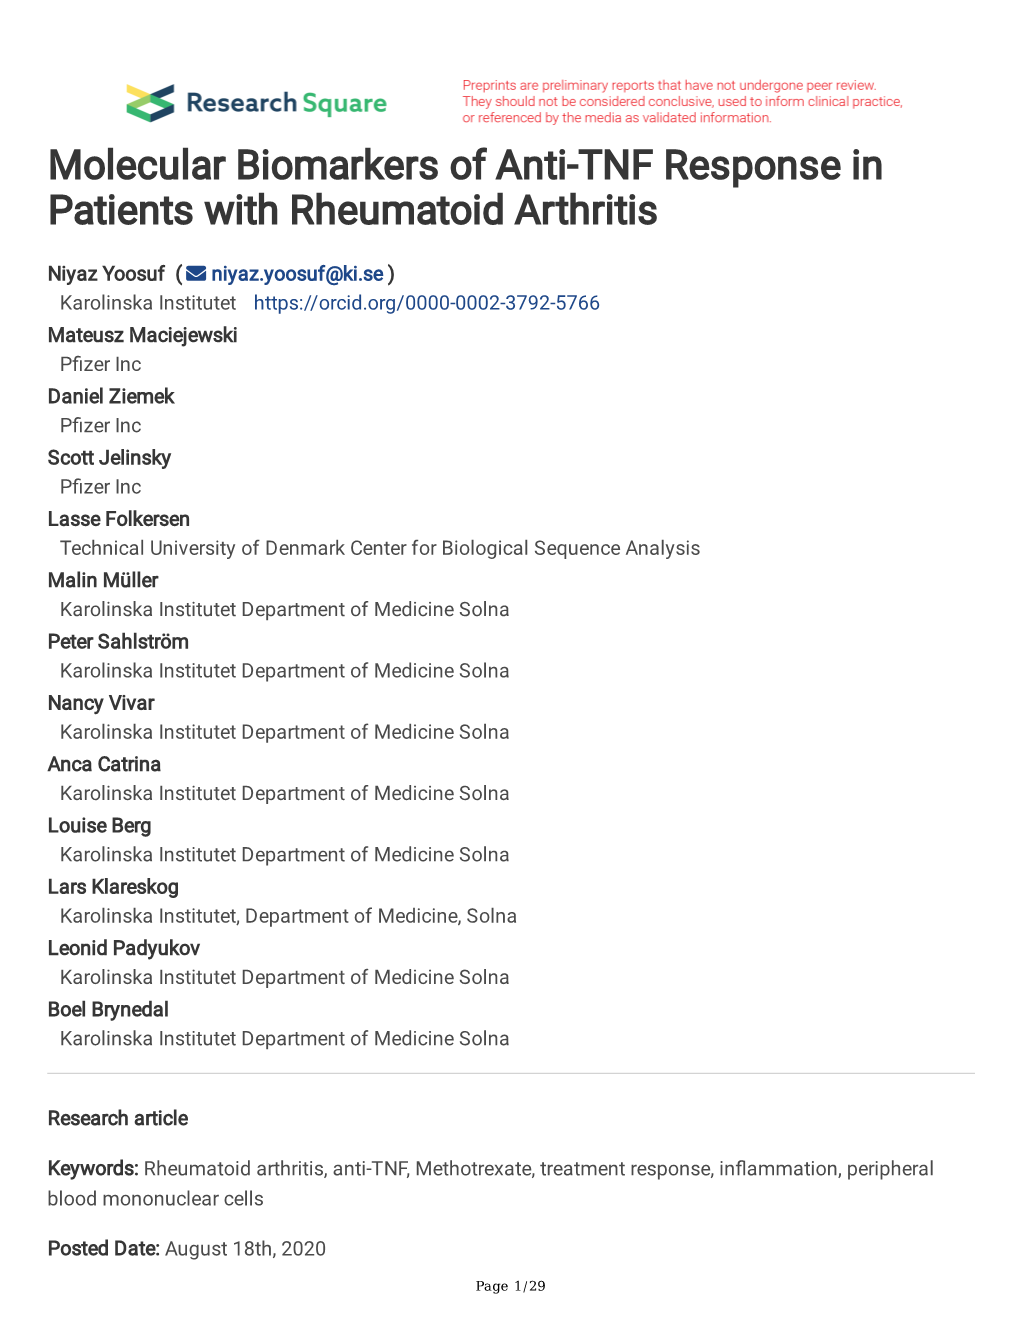 Molecular Biomarkers of Anti-TNF Response in Patients with Rheumatoid Arthritis